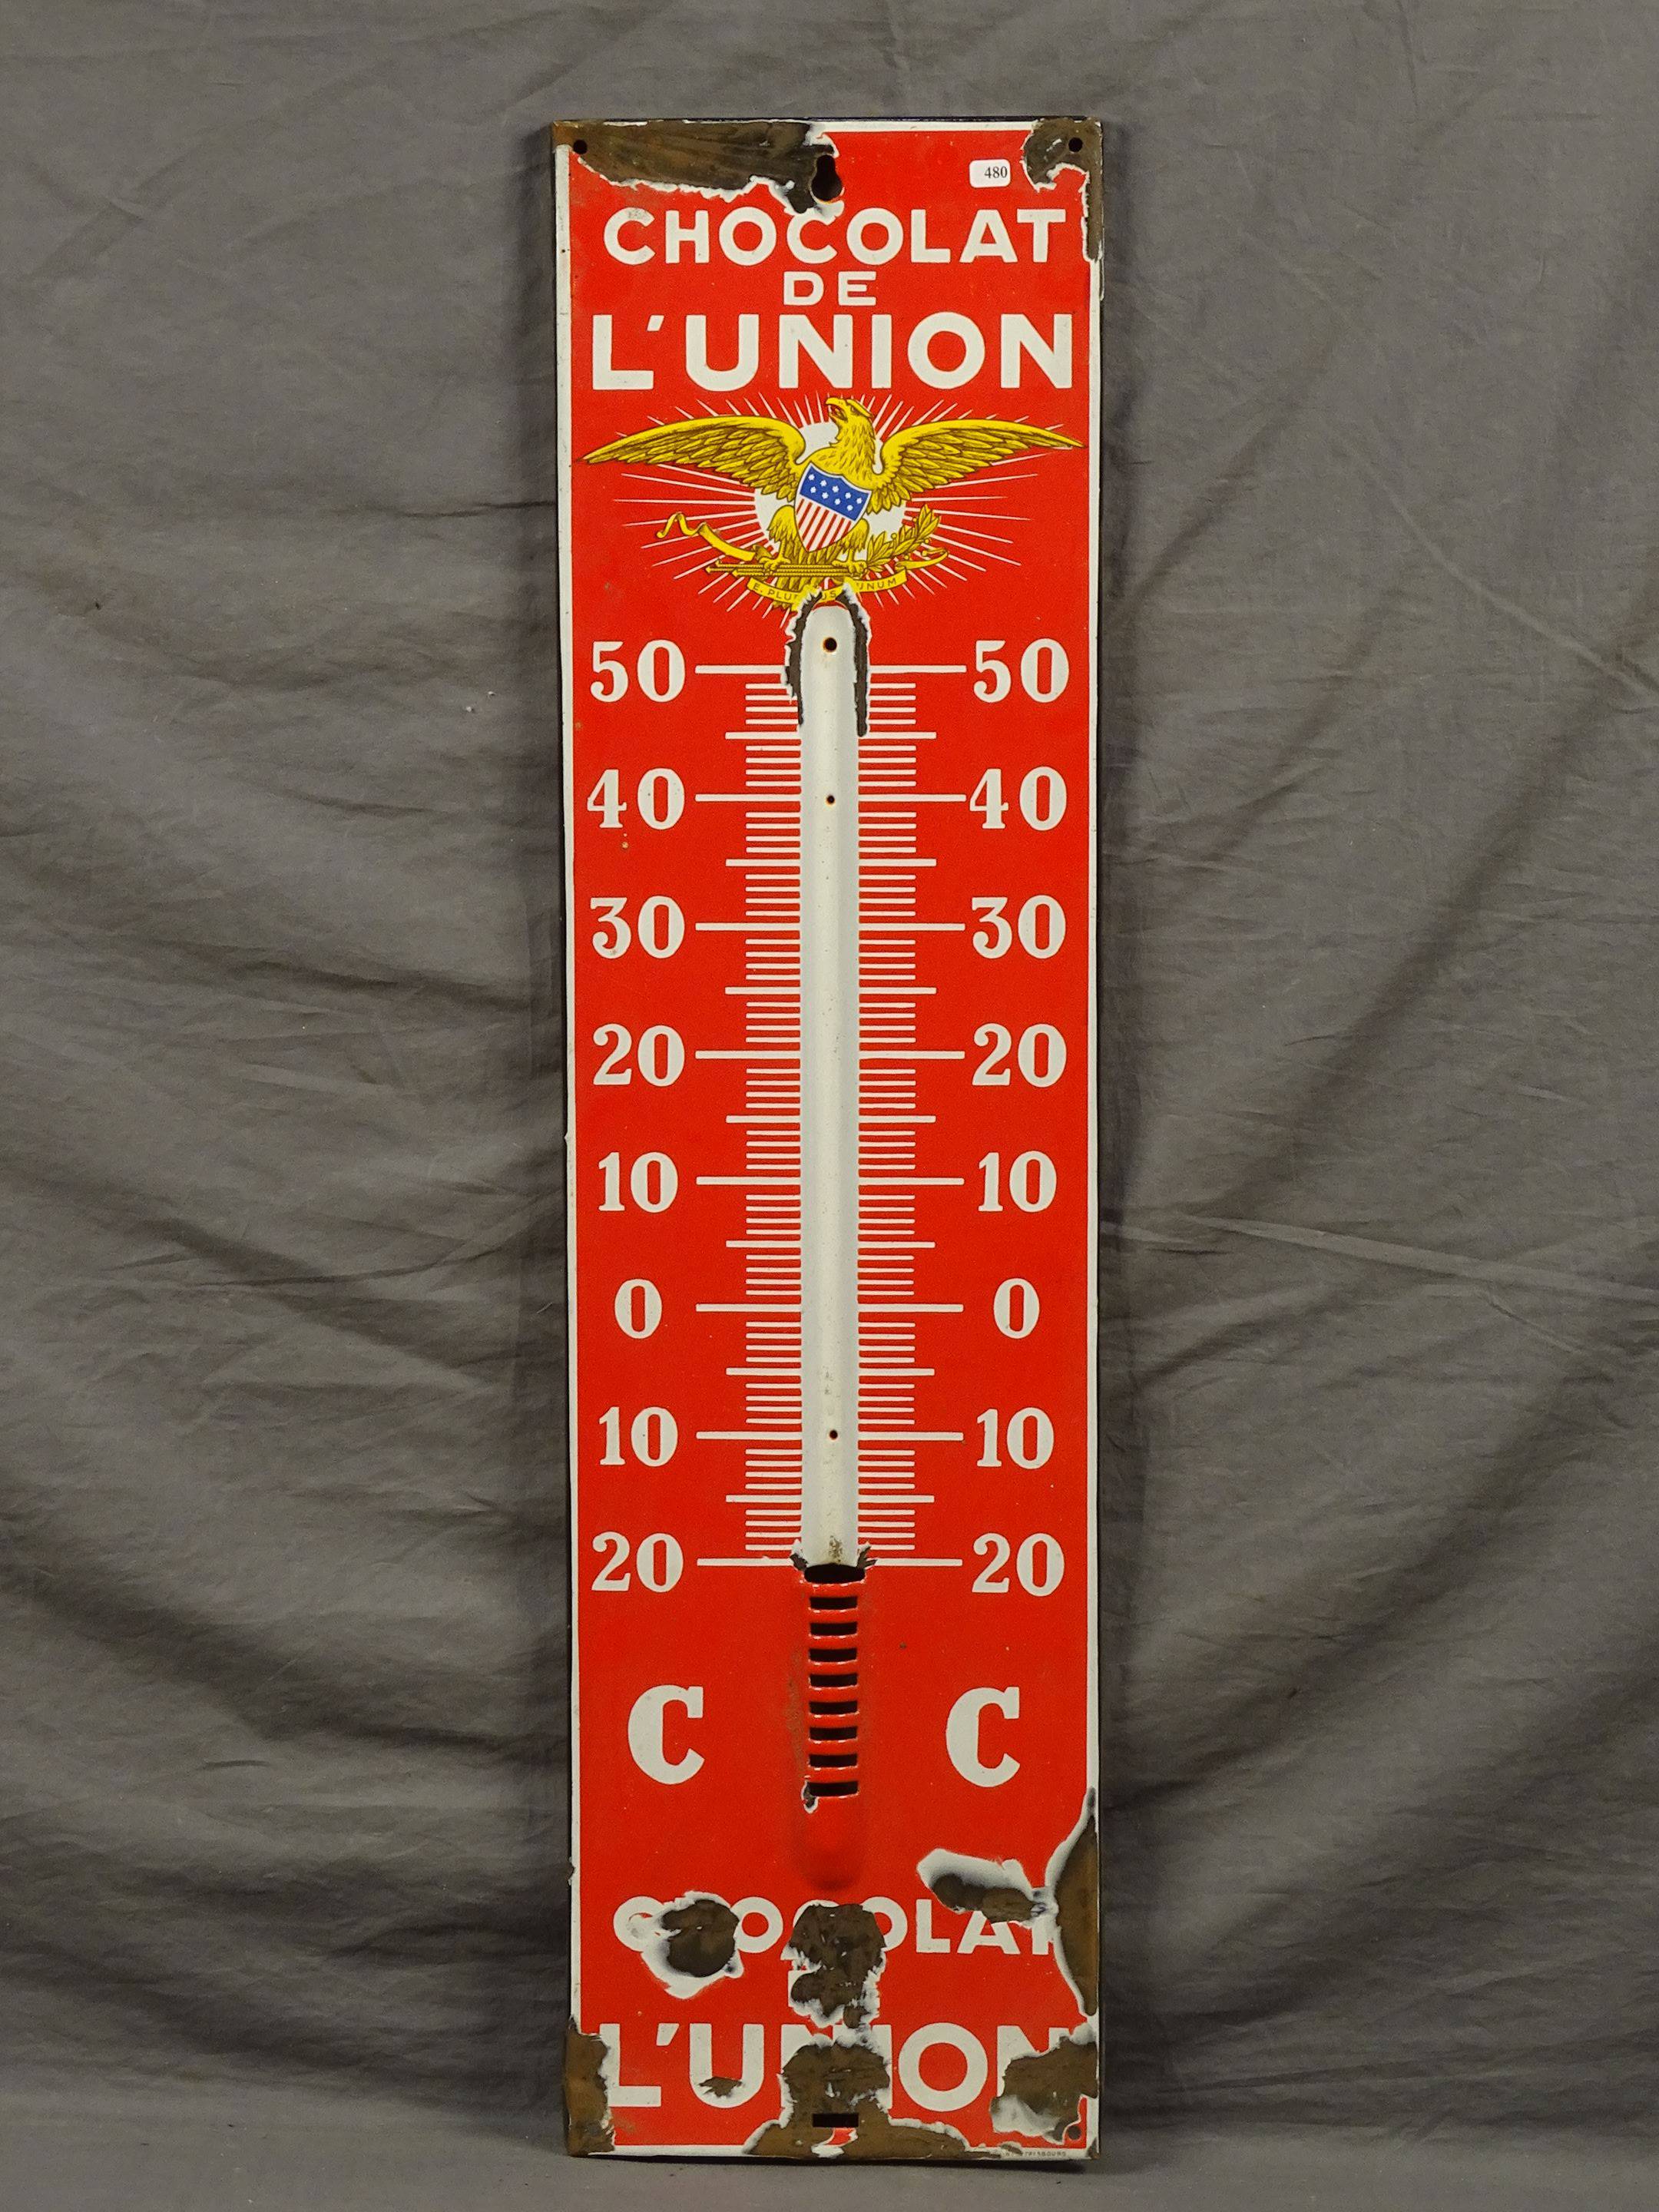 Thermometer CHOCOLAT MENIER